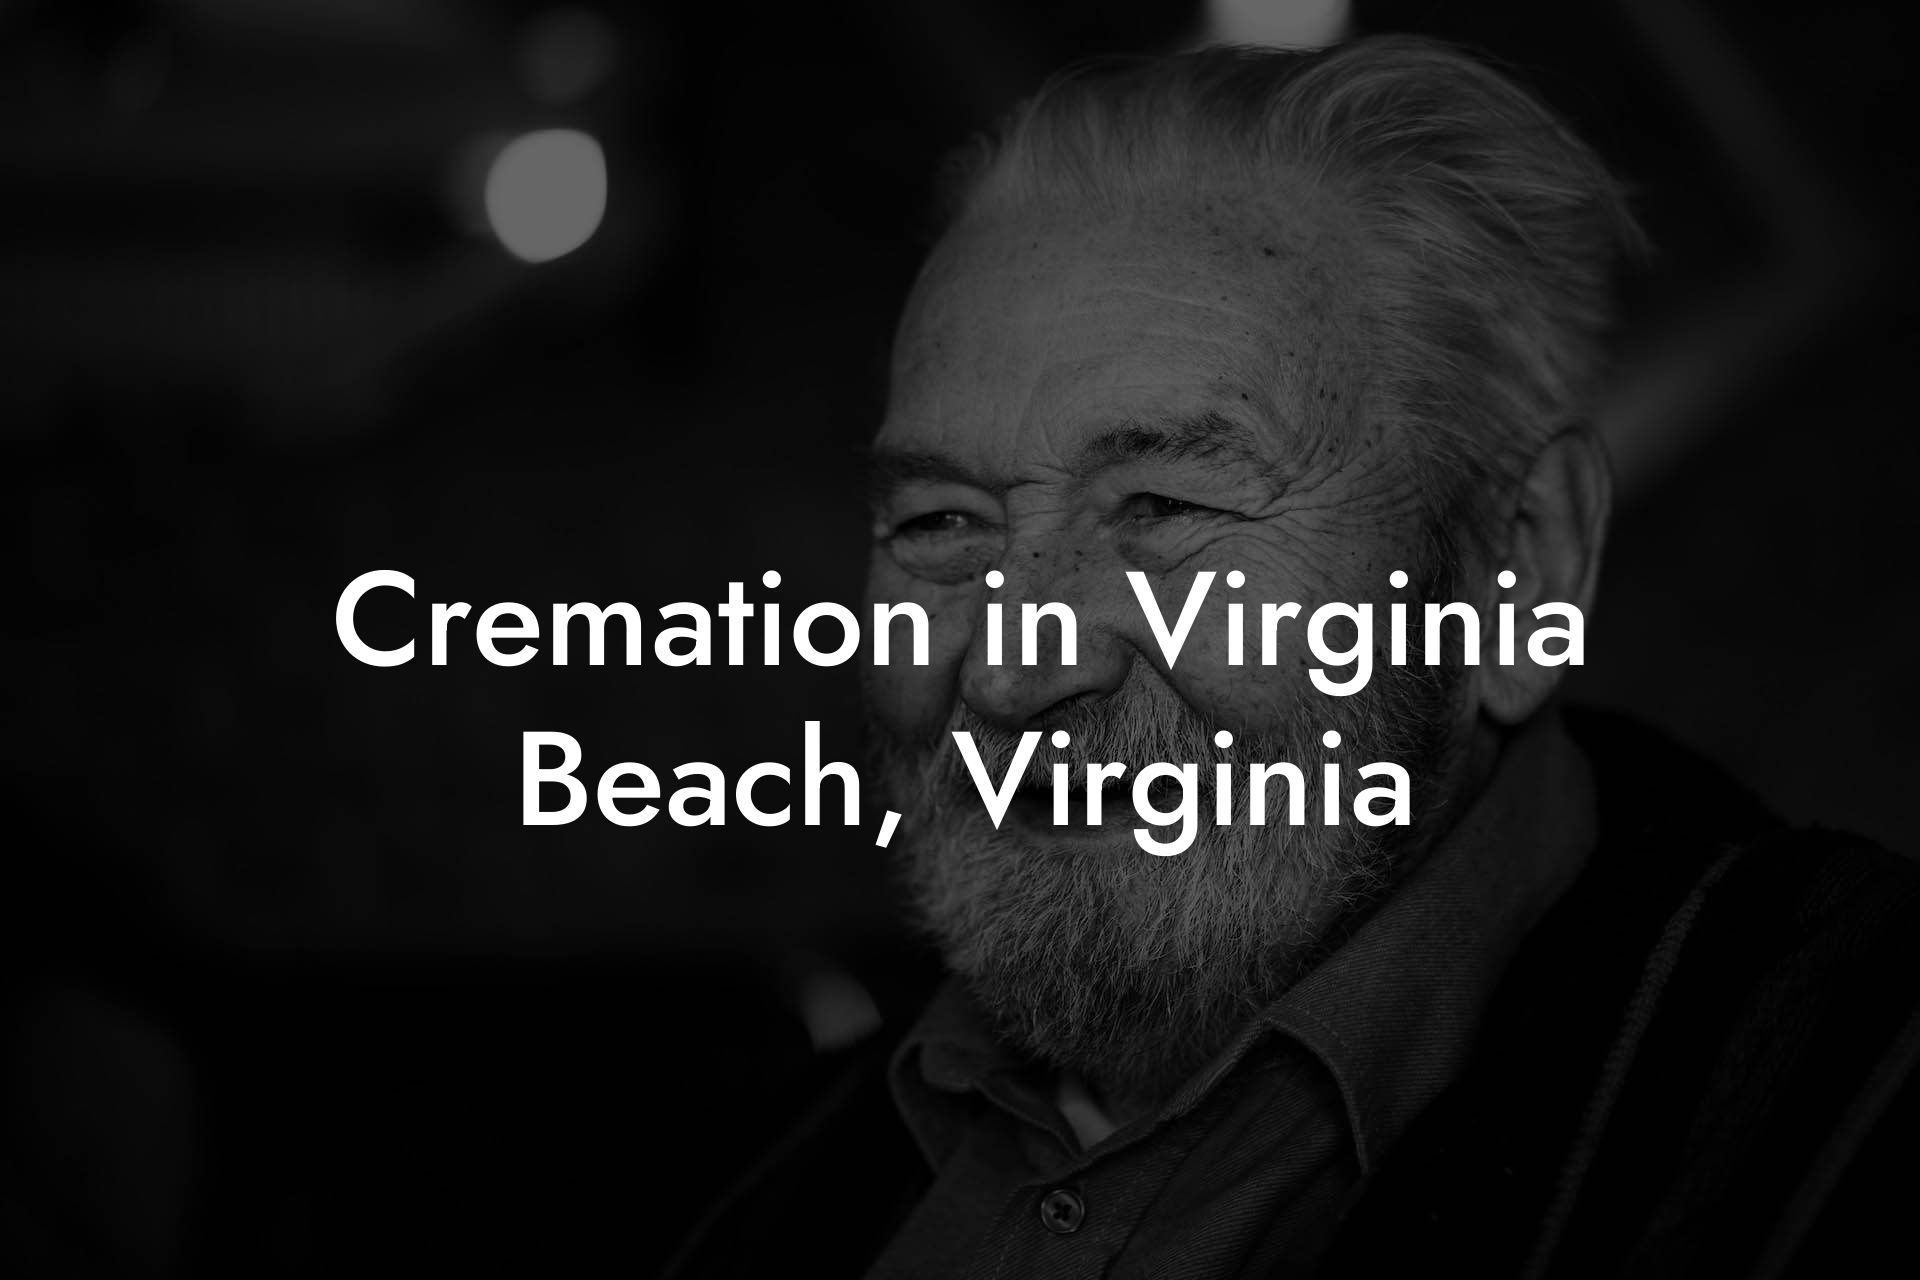 Cremation in Virginia Beach, Virginia